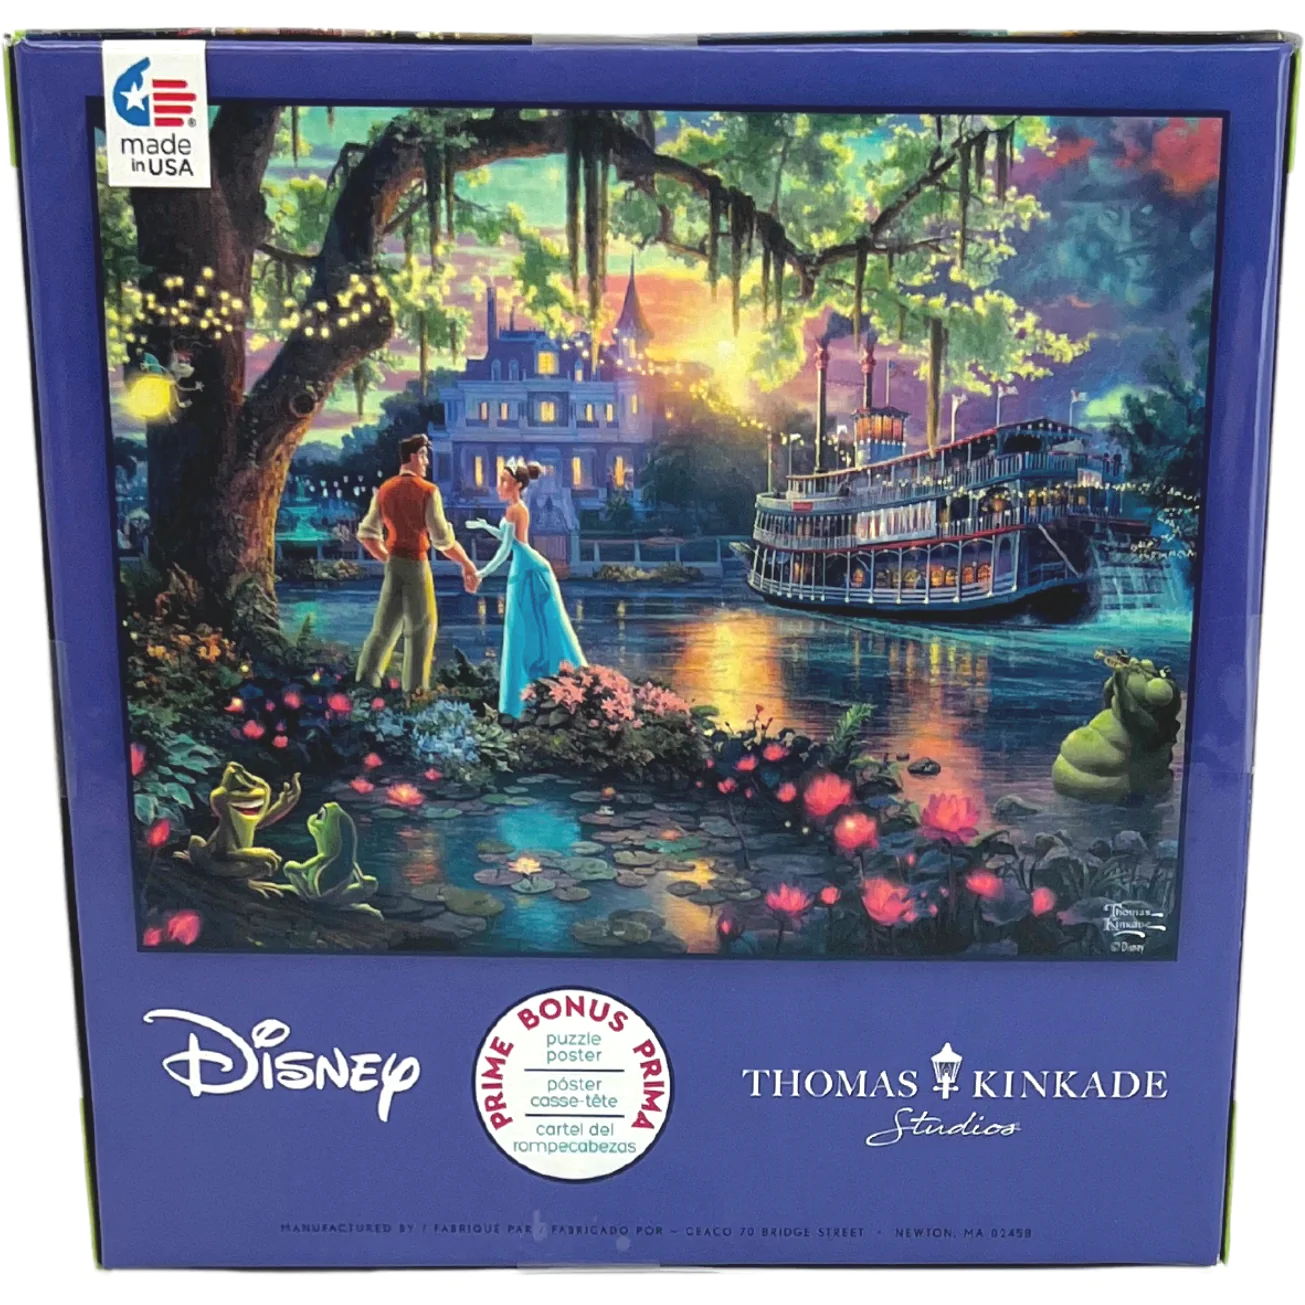 Thomas Kinkade Disney Jigsaw Puzzle / 750 Pieces / Disney Movies & Characters / Ages 12+